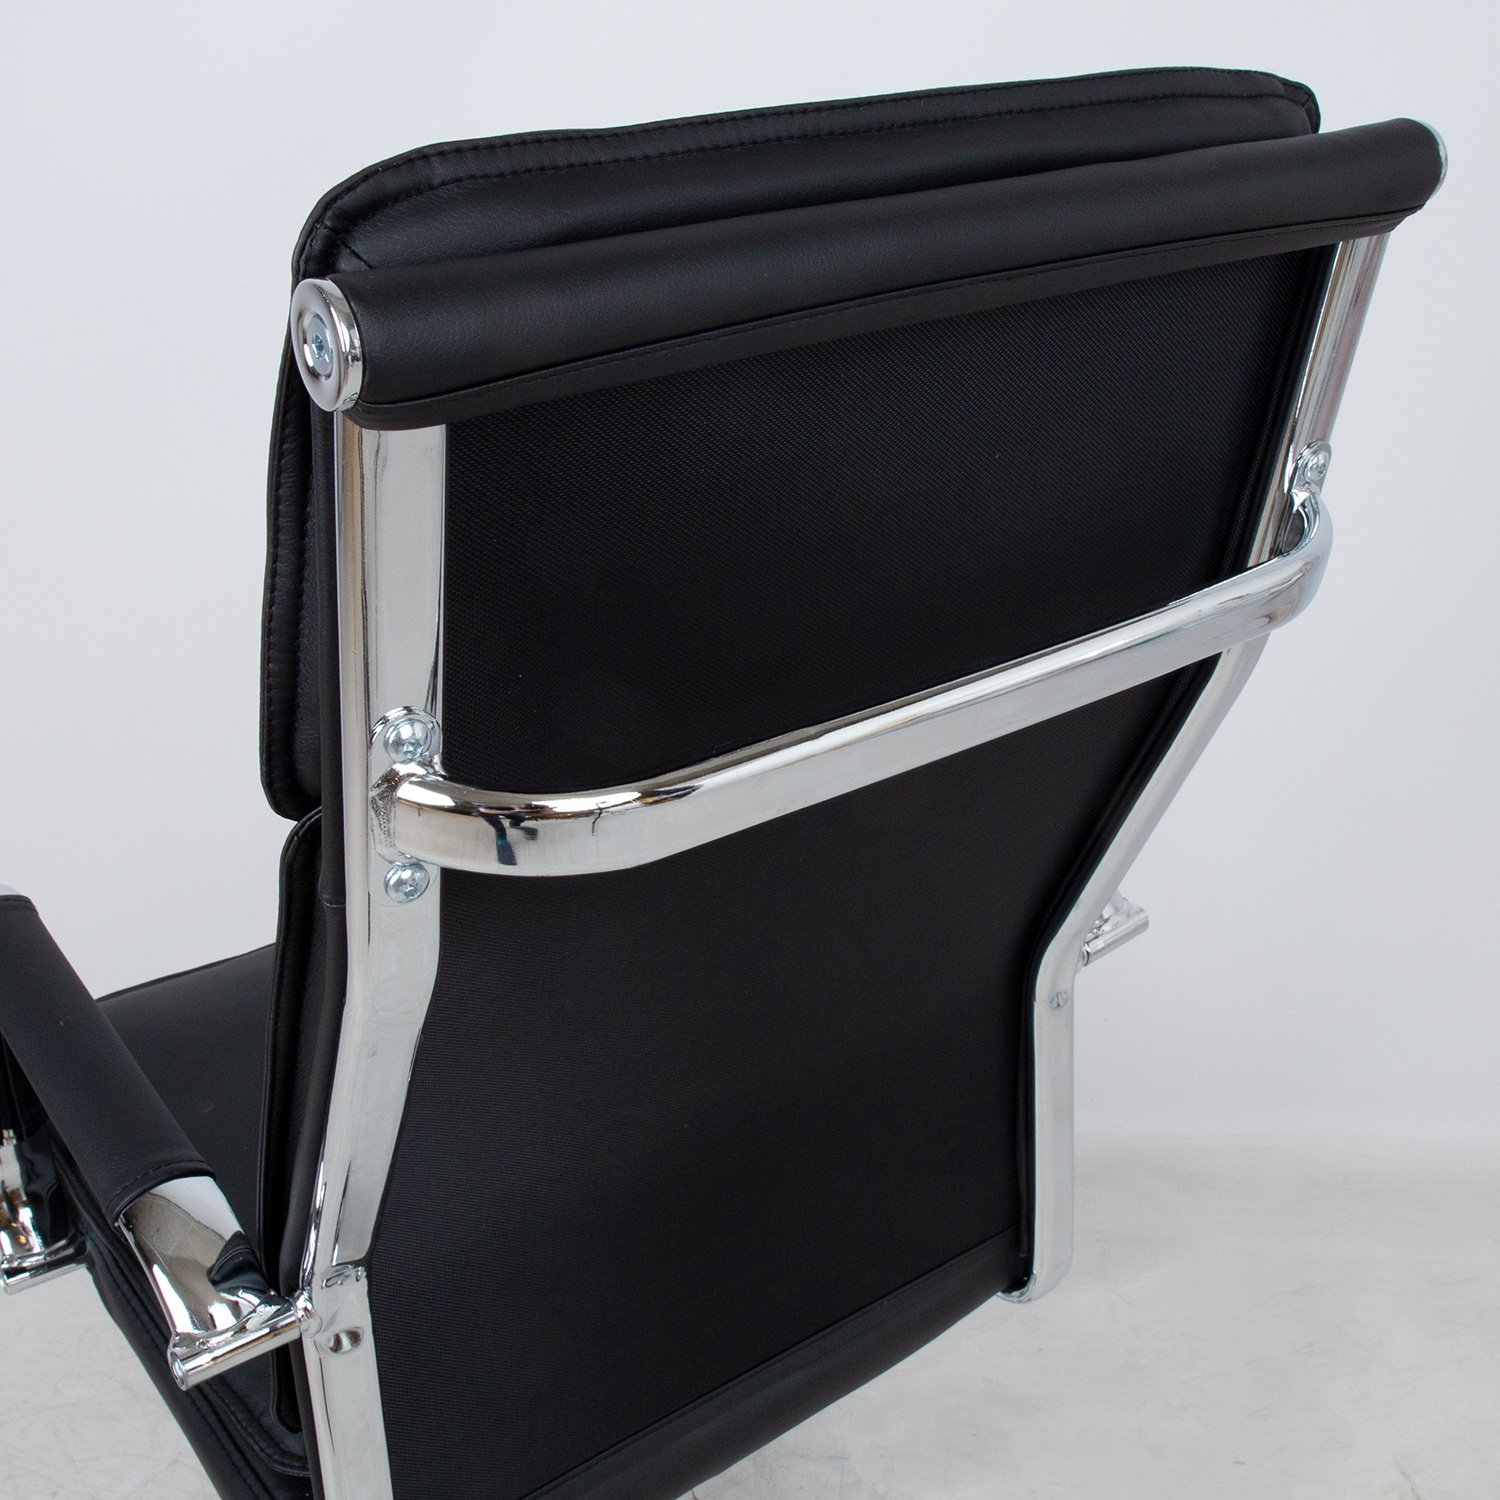 Biuro kėdė ULTRA, 54,5x60xH106,5-116,5 cm, juoda - 7